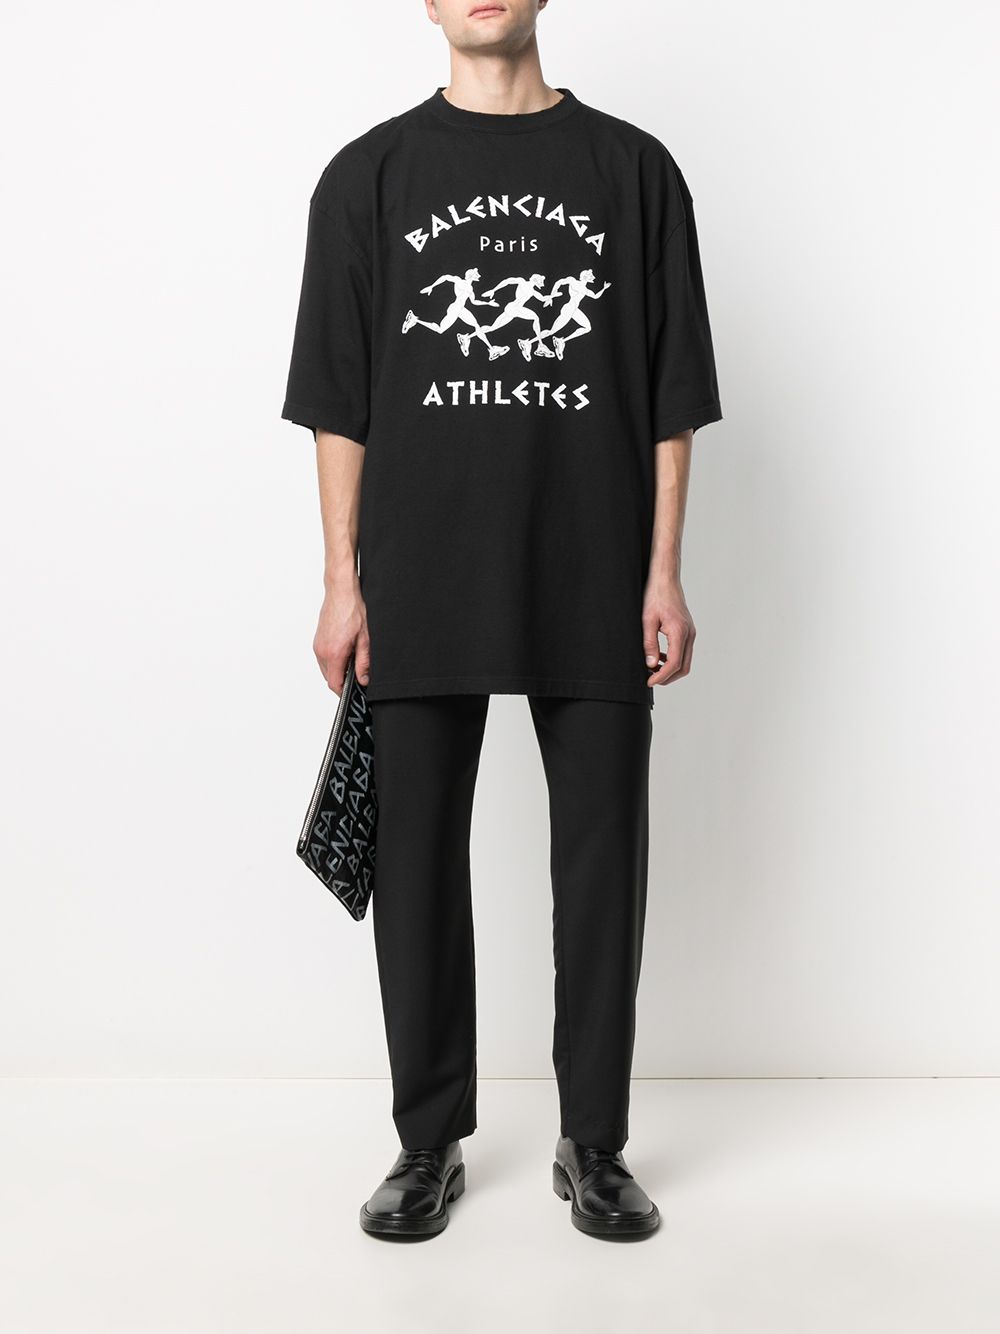 Balenciaga Athletes Print T-Shirt Black - MAISONDEFASHION.COM